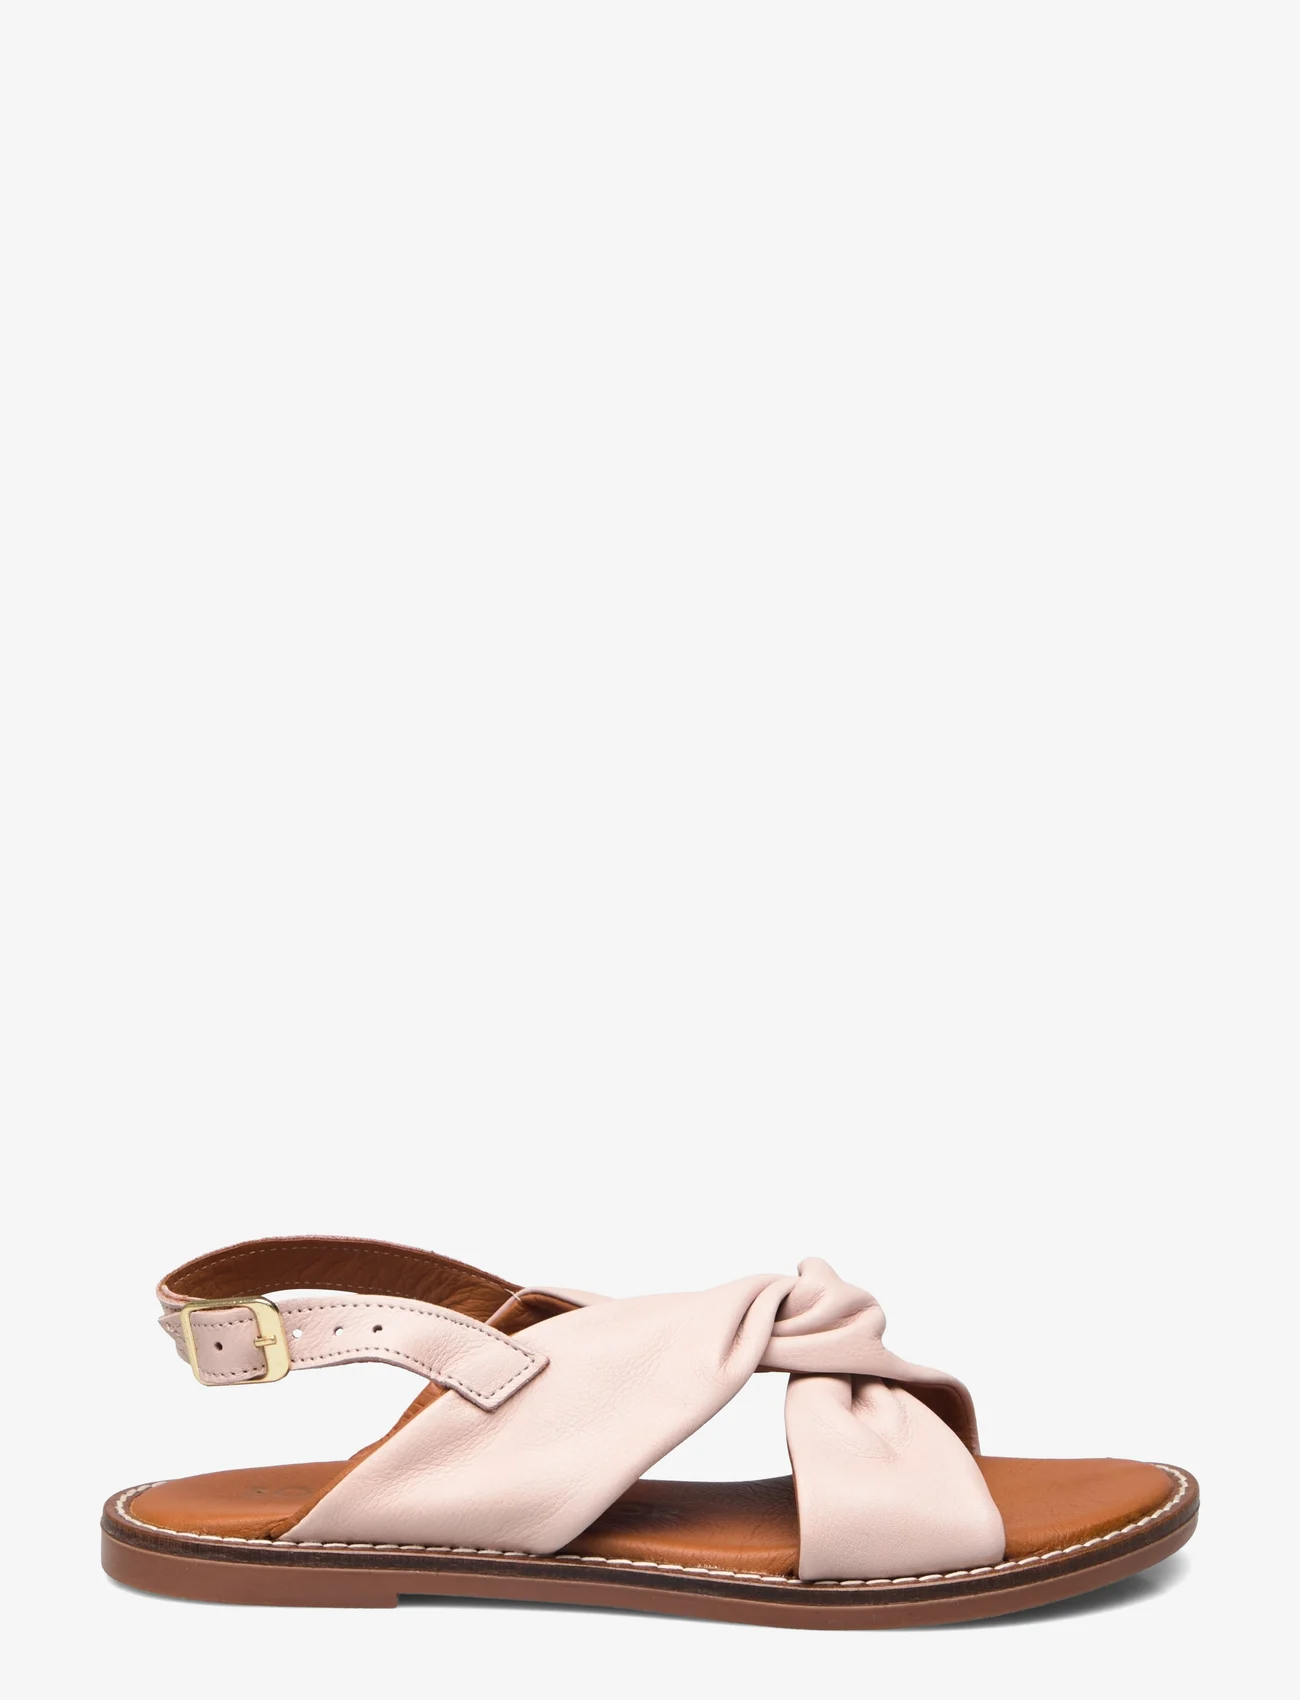 Sofie Schnoor - Sandal - flat sandals - nude rose - 1